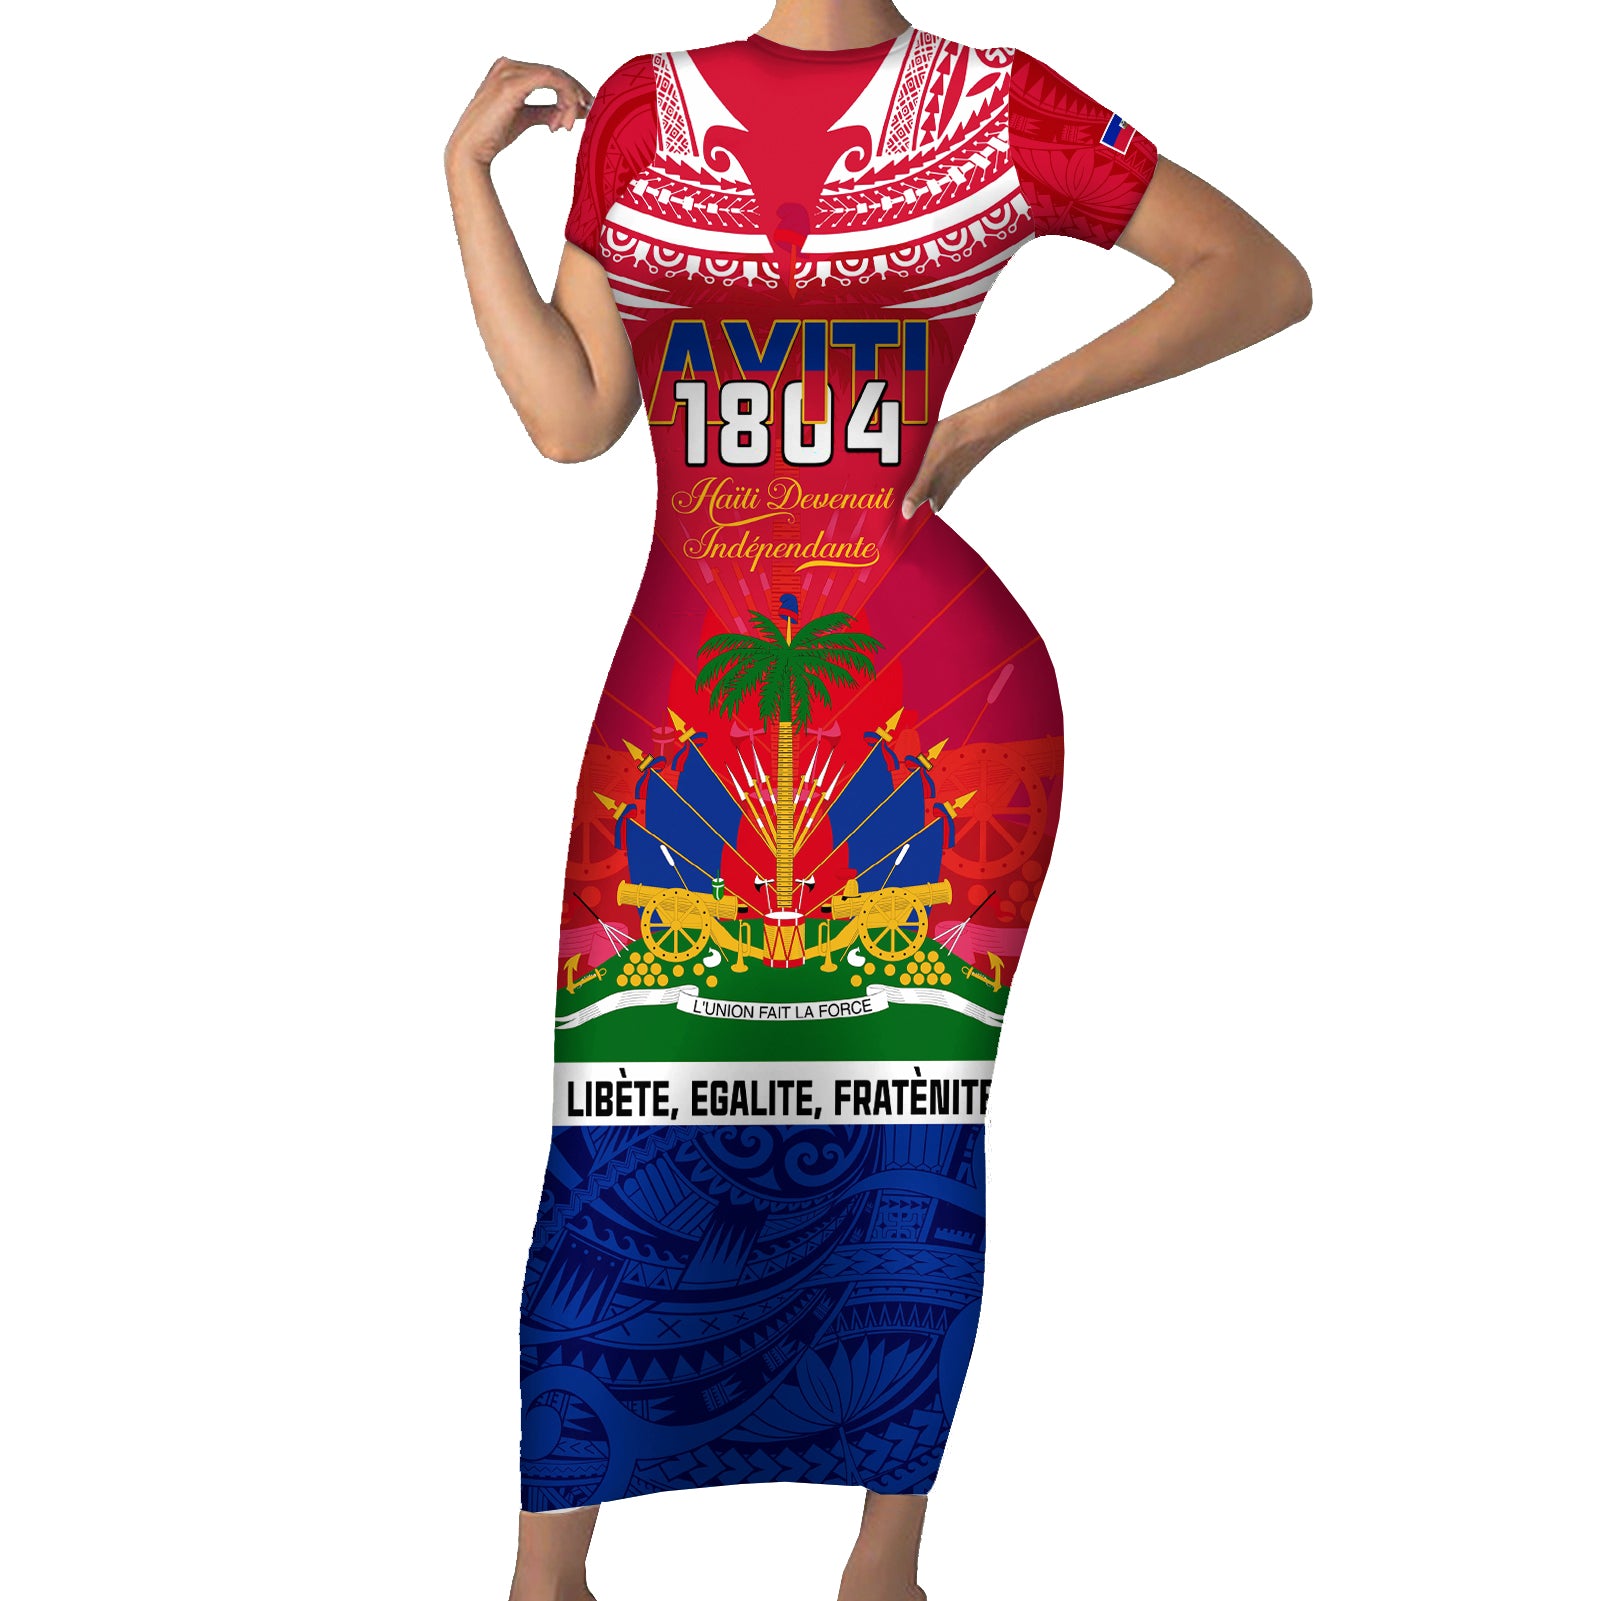 haiti-independence-day-short-sleeve-bodycon-dress-libete-egalite-fratenite-ayiti-1804-with-polynesian-pattern